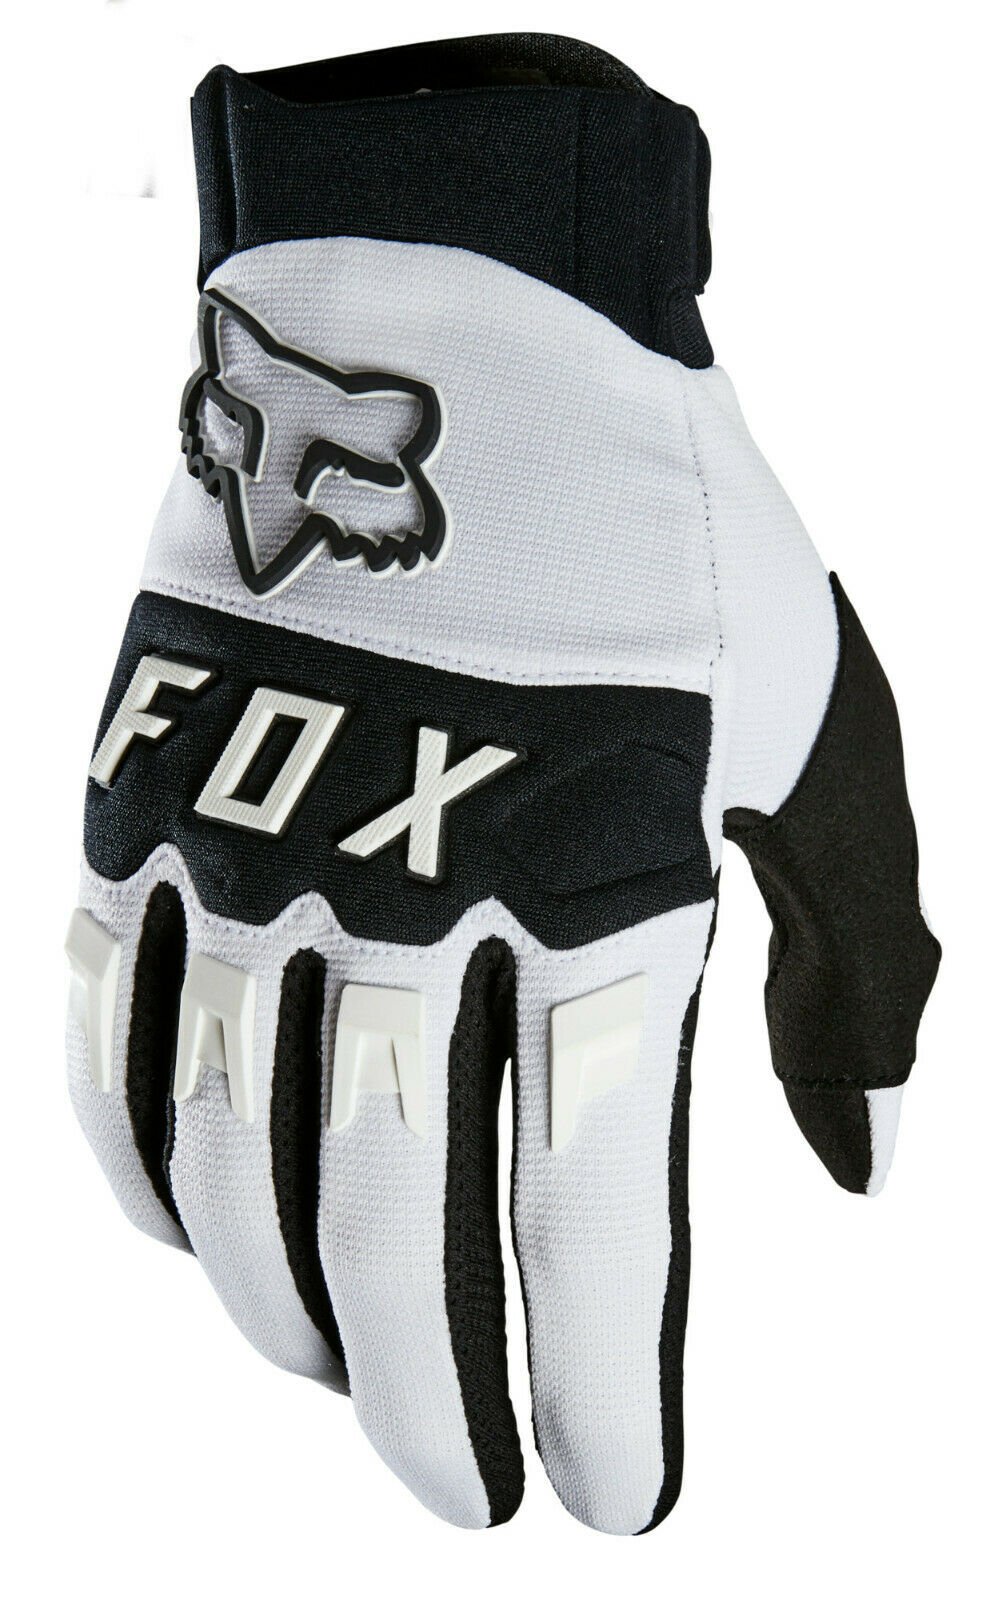 Off-Road ATV Dirt Bike Gear Fox Racing Dirtpaw MX Motocross Race Gloves